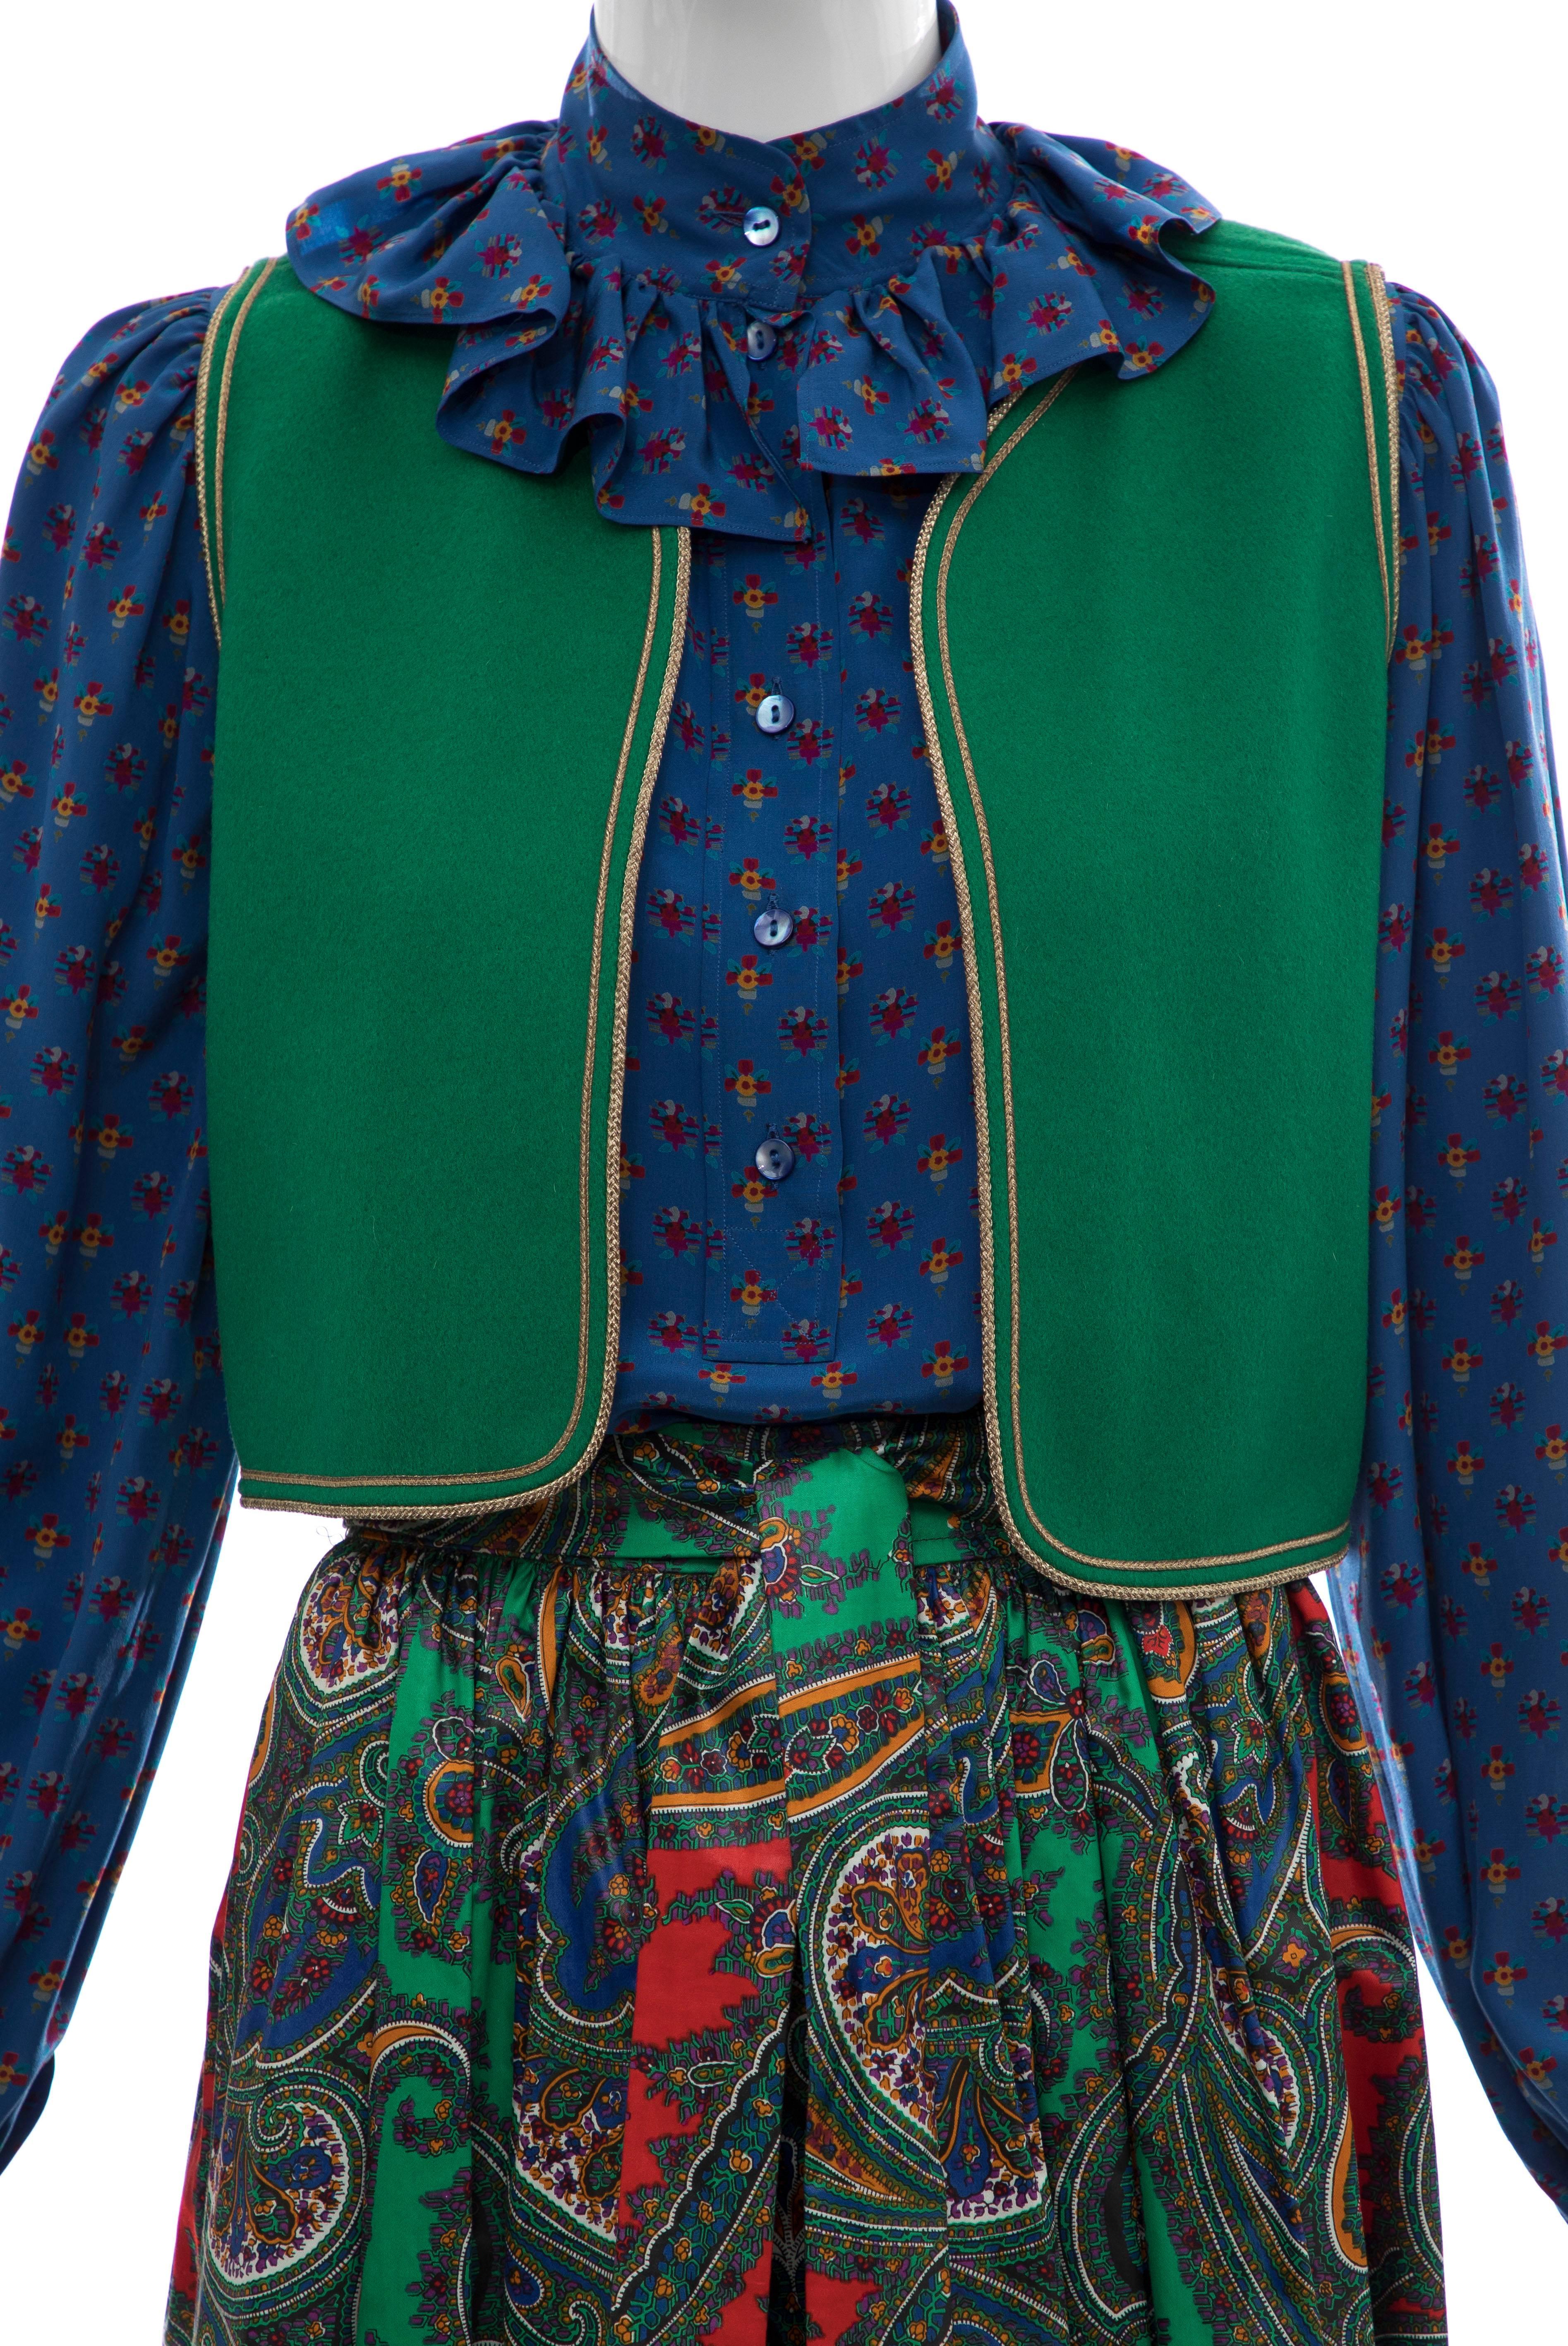 Women's Yves Saint Laurent Rive Gauche Silk Cotton Sateen Wool Skirt Suit, Circa 1970s For Sale